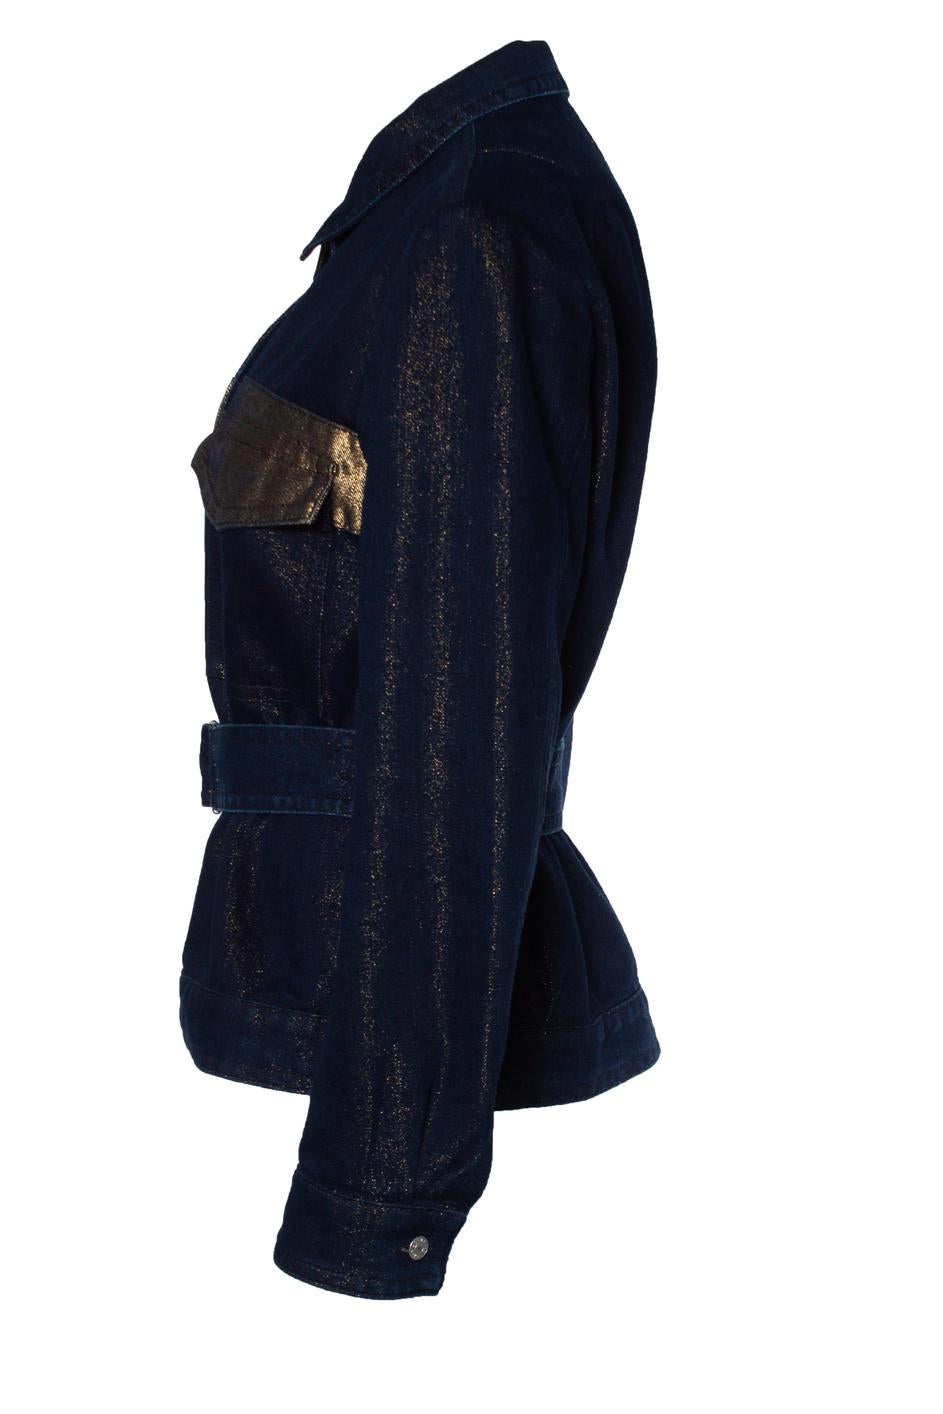 Dries van Noten, Denim lurex jacket with gold flap pockets and belt. The item is in very good condition.

• CONDITION: very good condition 

• SIZE: DE42 - XL 

• MEASUREMENTS: length 61 cm, width 45 cm, waist 51 cm, shoulder width 44 cm, sleeve